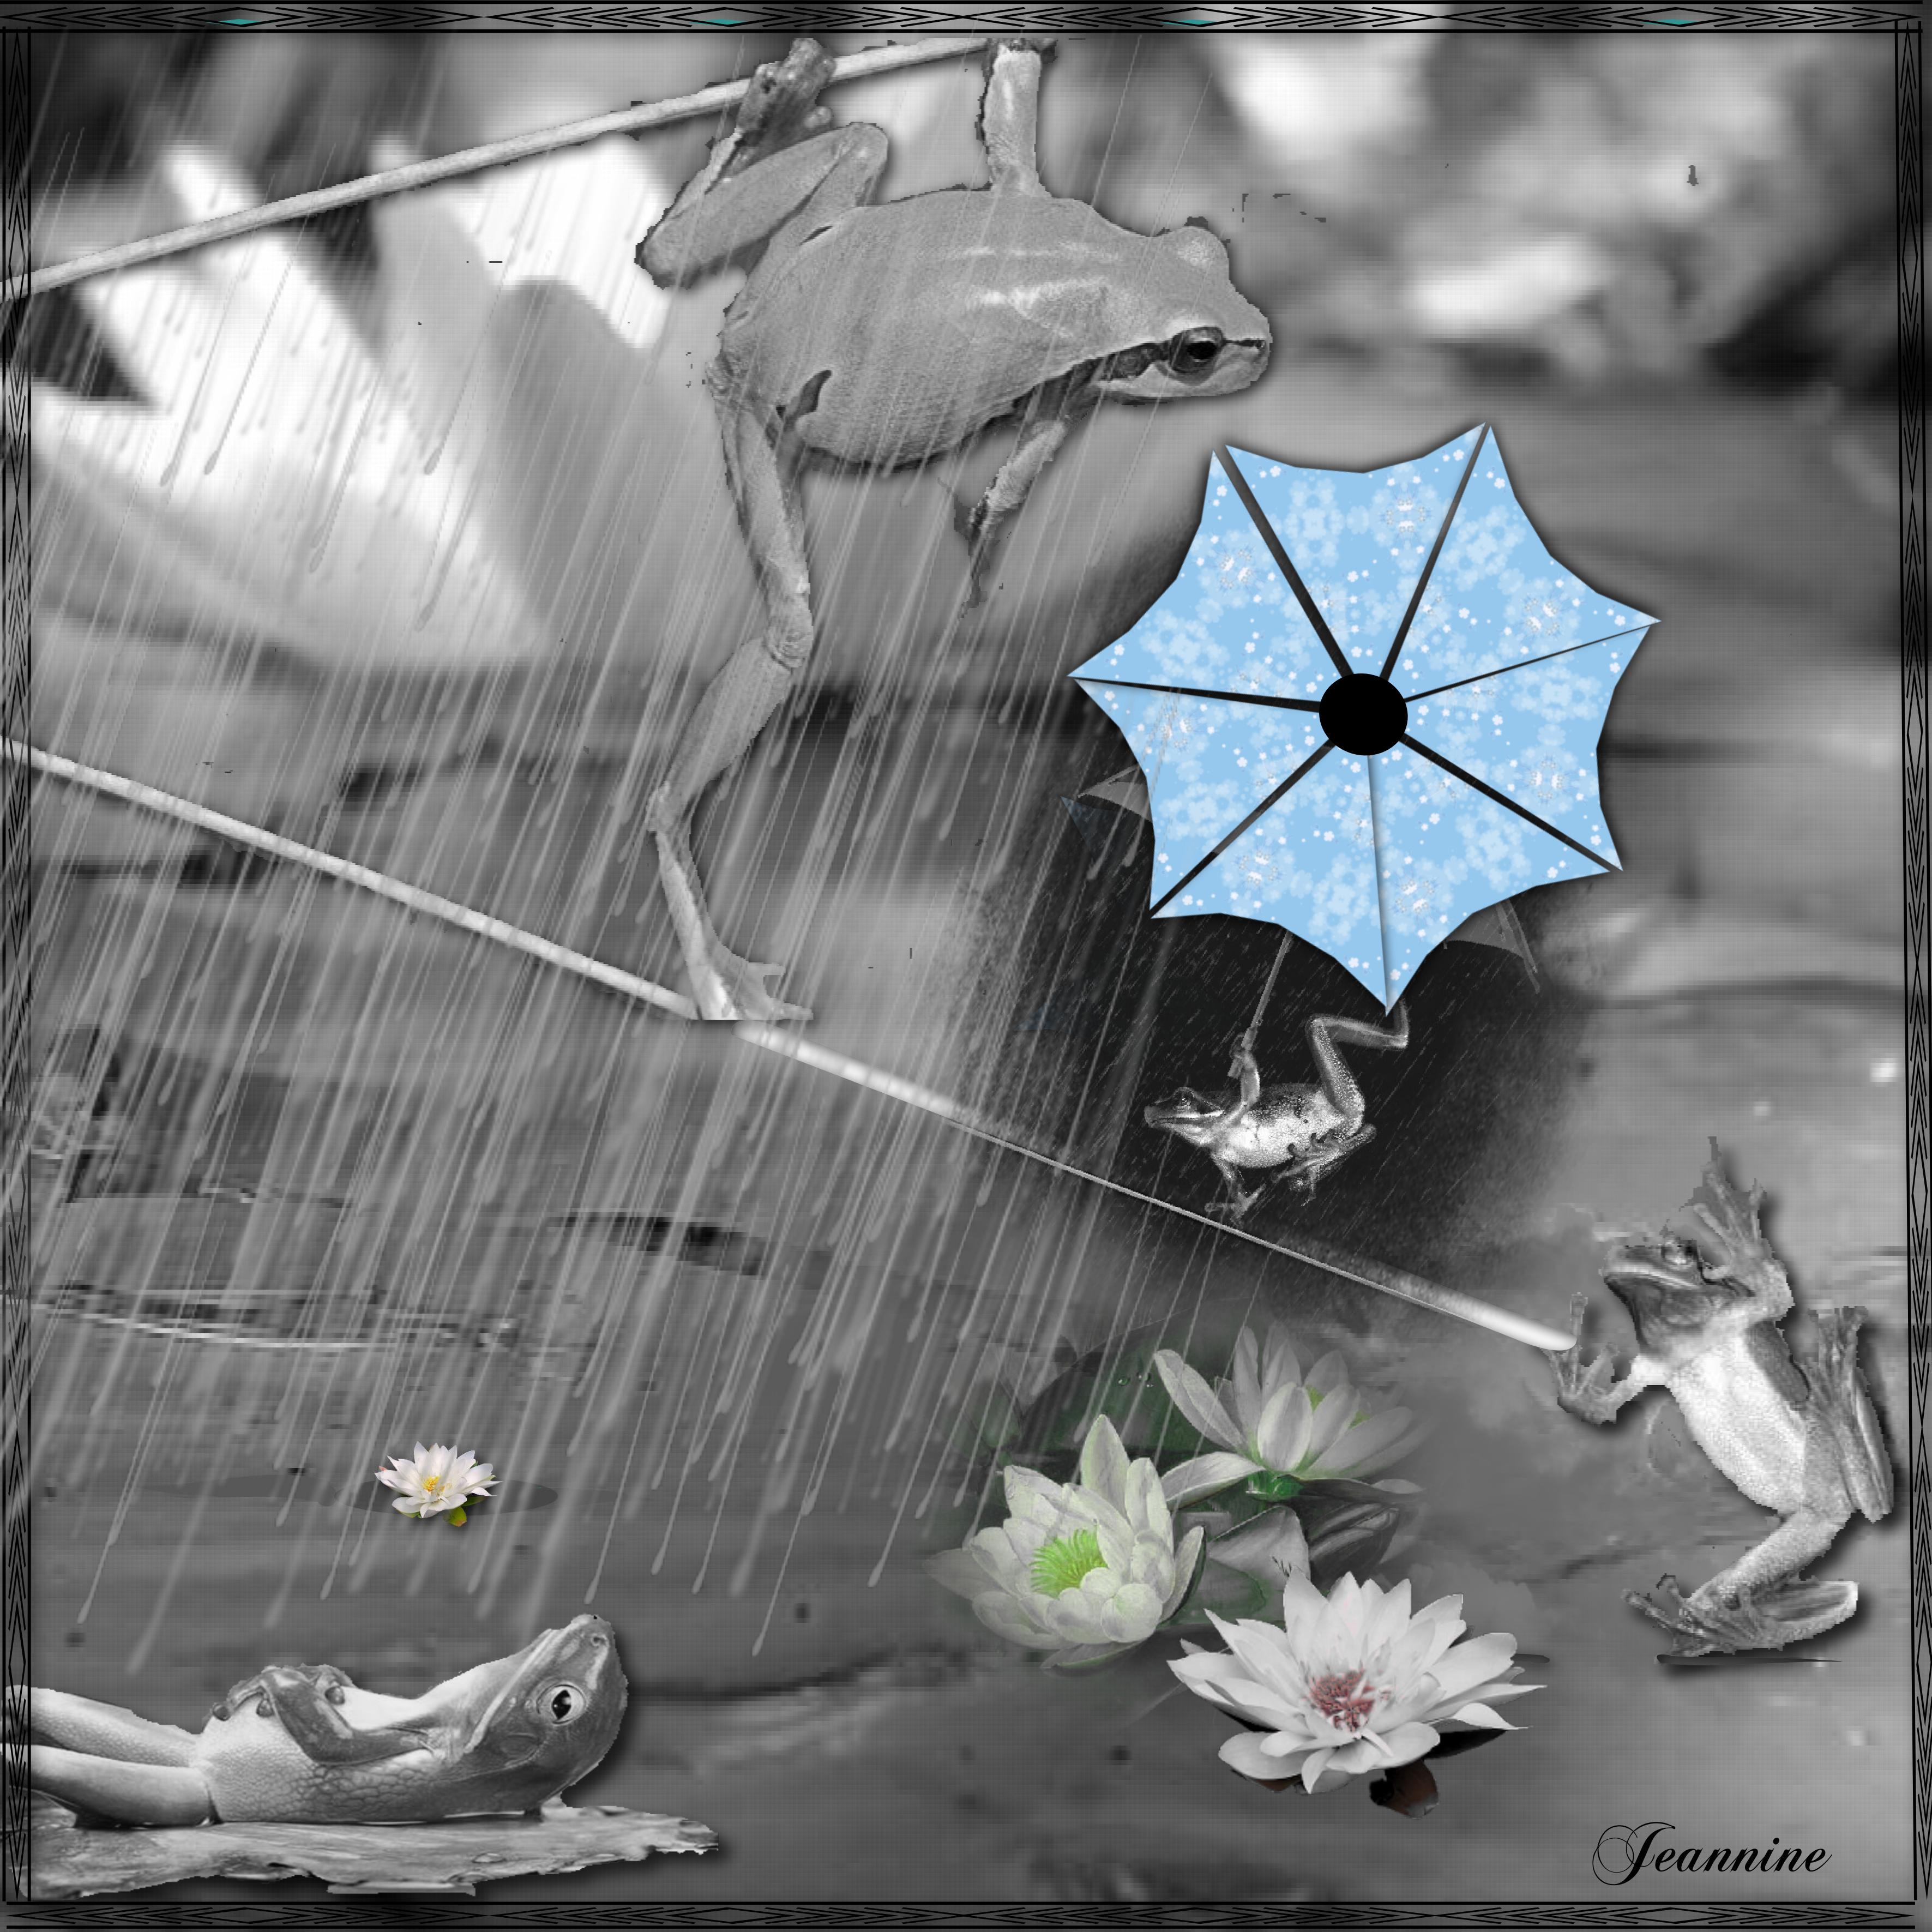 grenouille et parapluie Jeannine.jpg